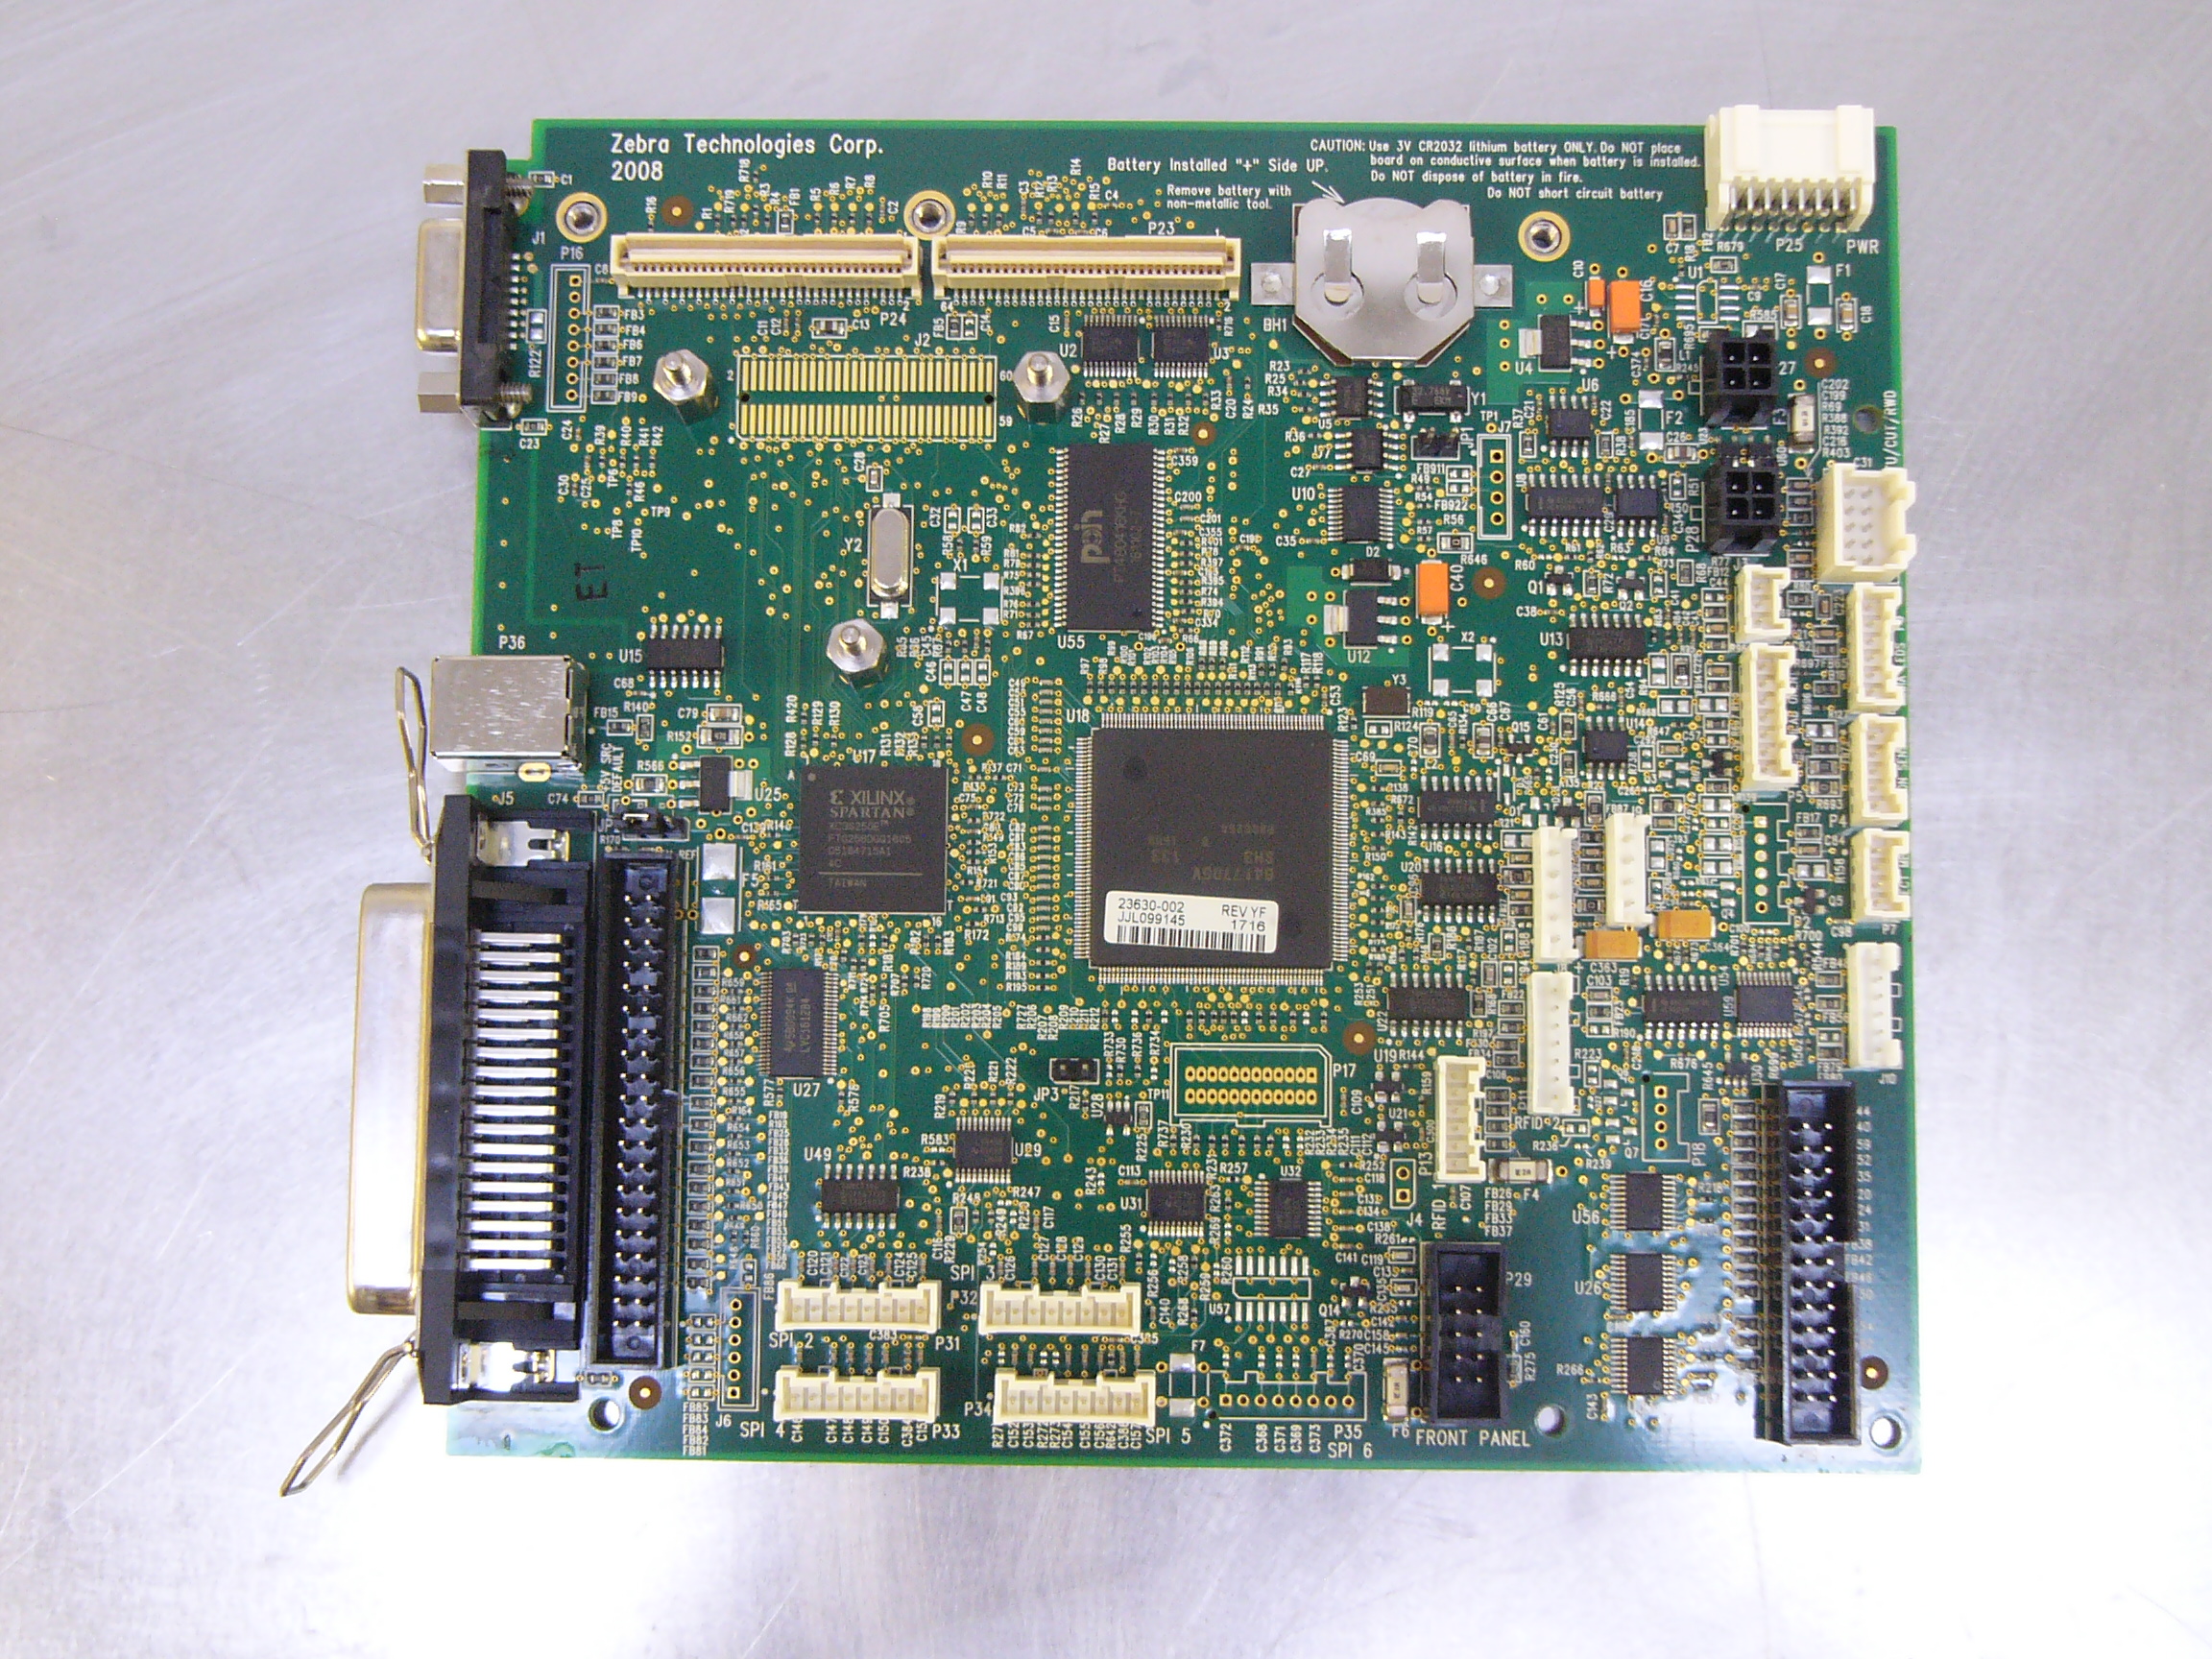 23630-002 -  - 23630-002, Main Logic Board 64MB,  Zebra 110XI4, 140XI4, 170XI4, 220XI4, 105SLplus printers